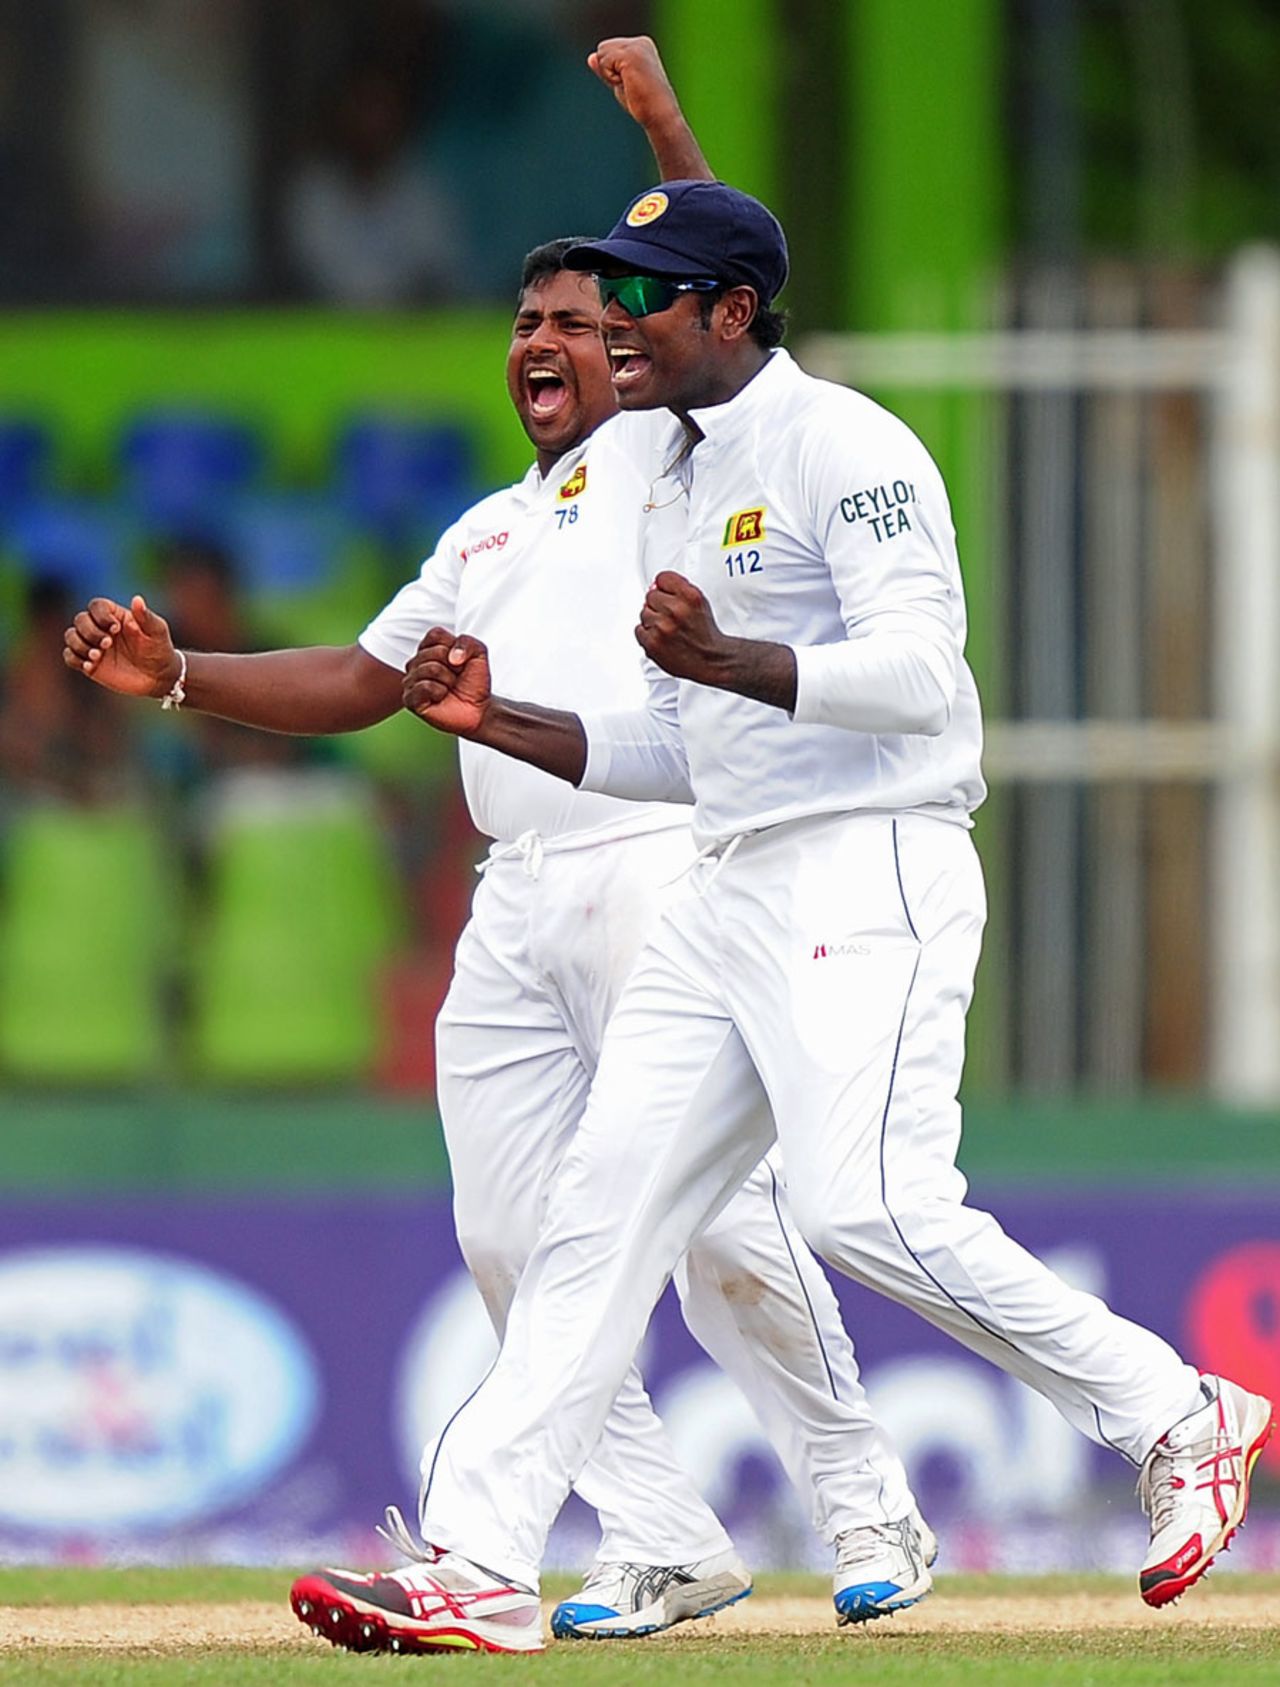 Rangana Herath and Angelo Mathews celebrate a wicket, Sri Lanka v Pakistan, 2nd Test, Colombo, 2nd day, August 15, 2014